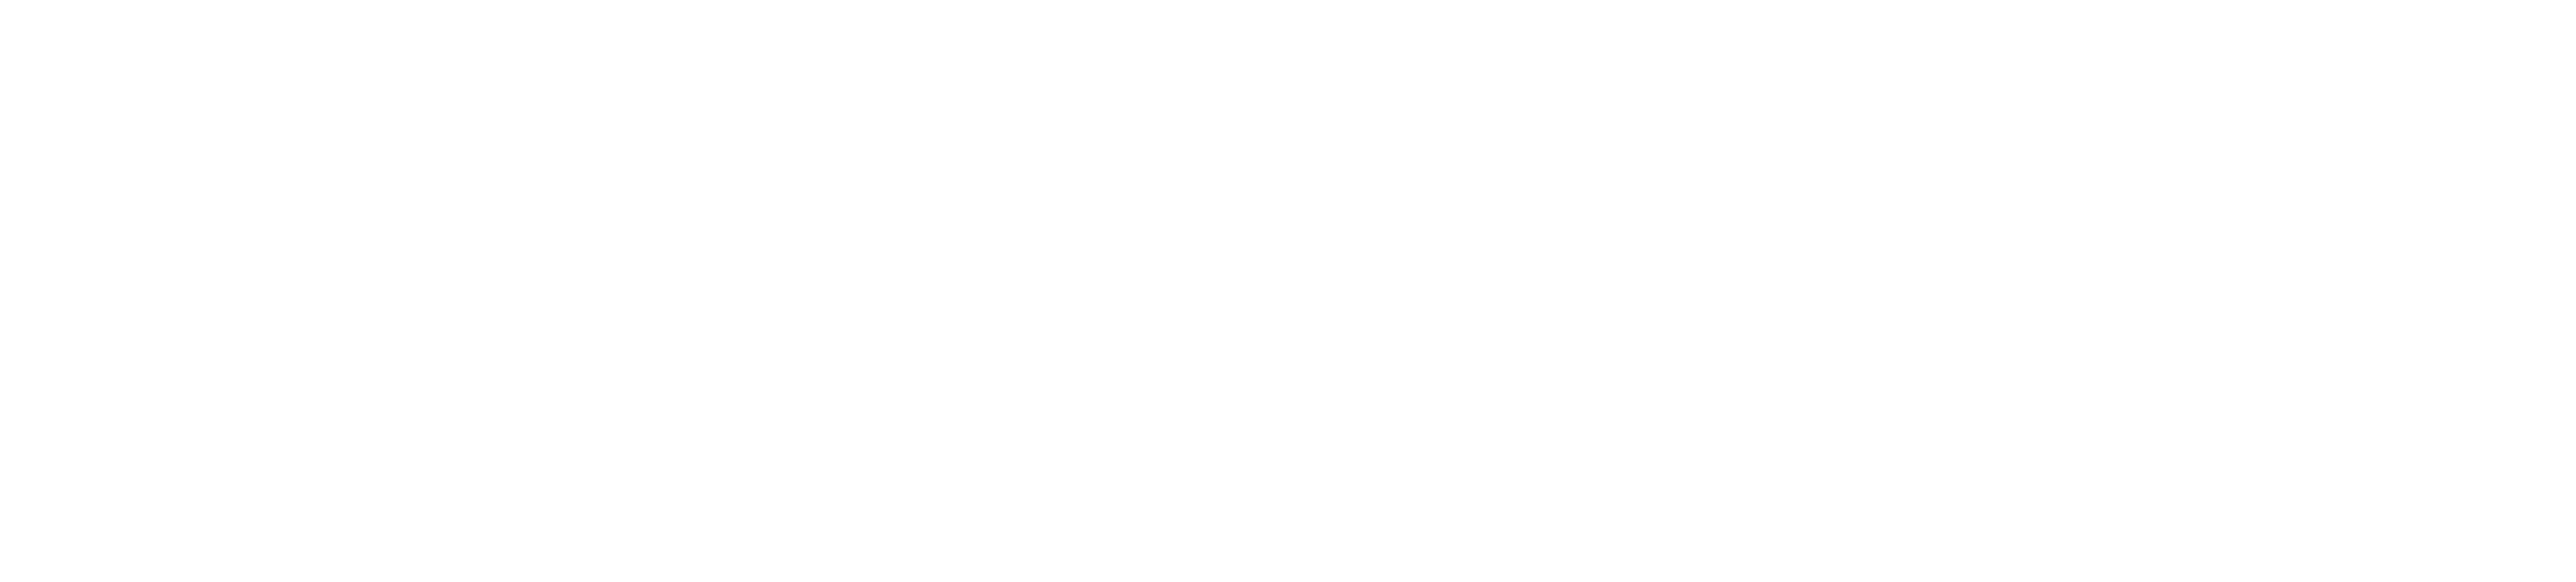 billomat_logo.png